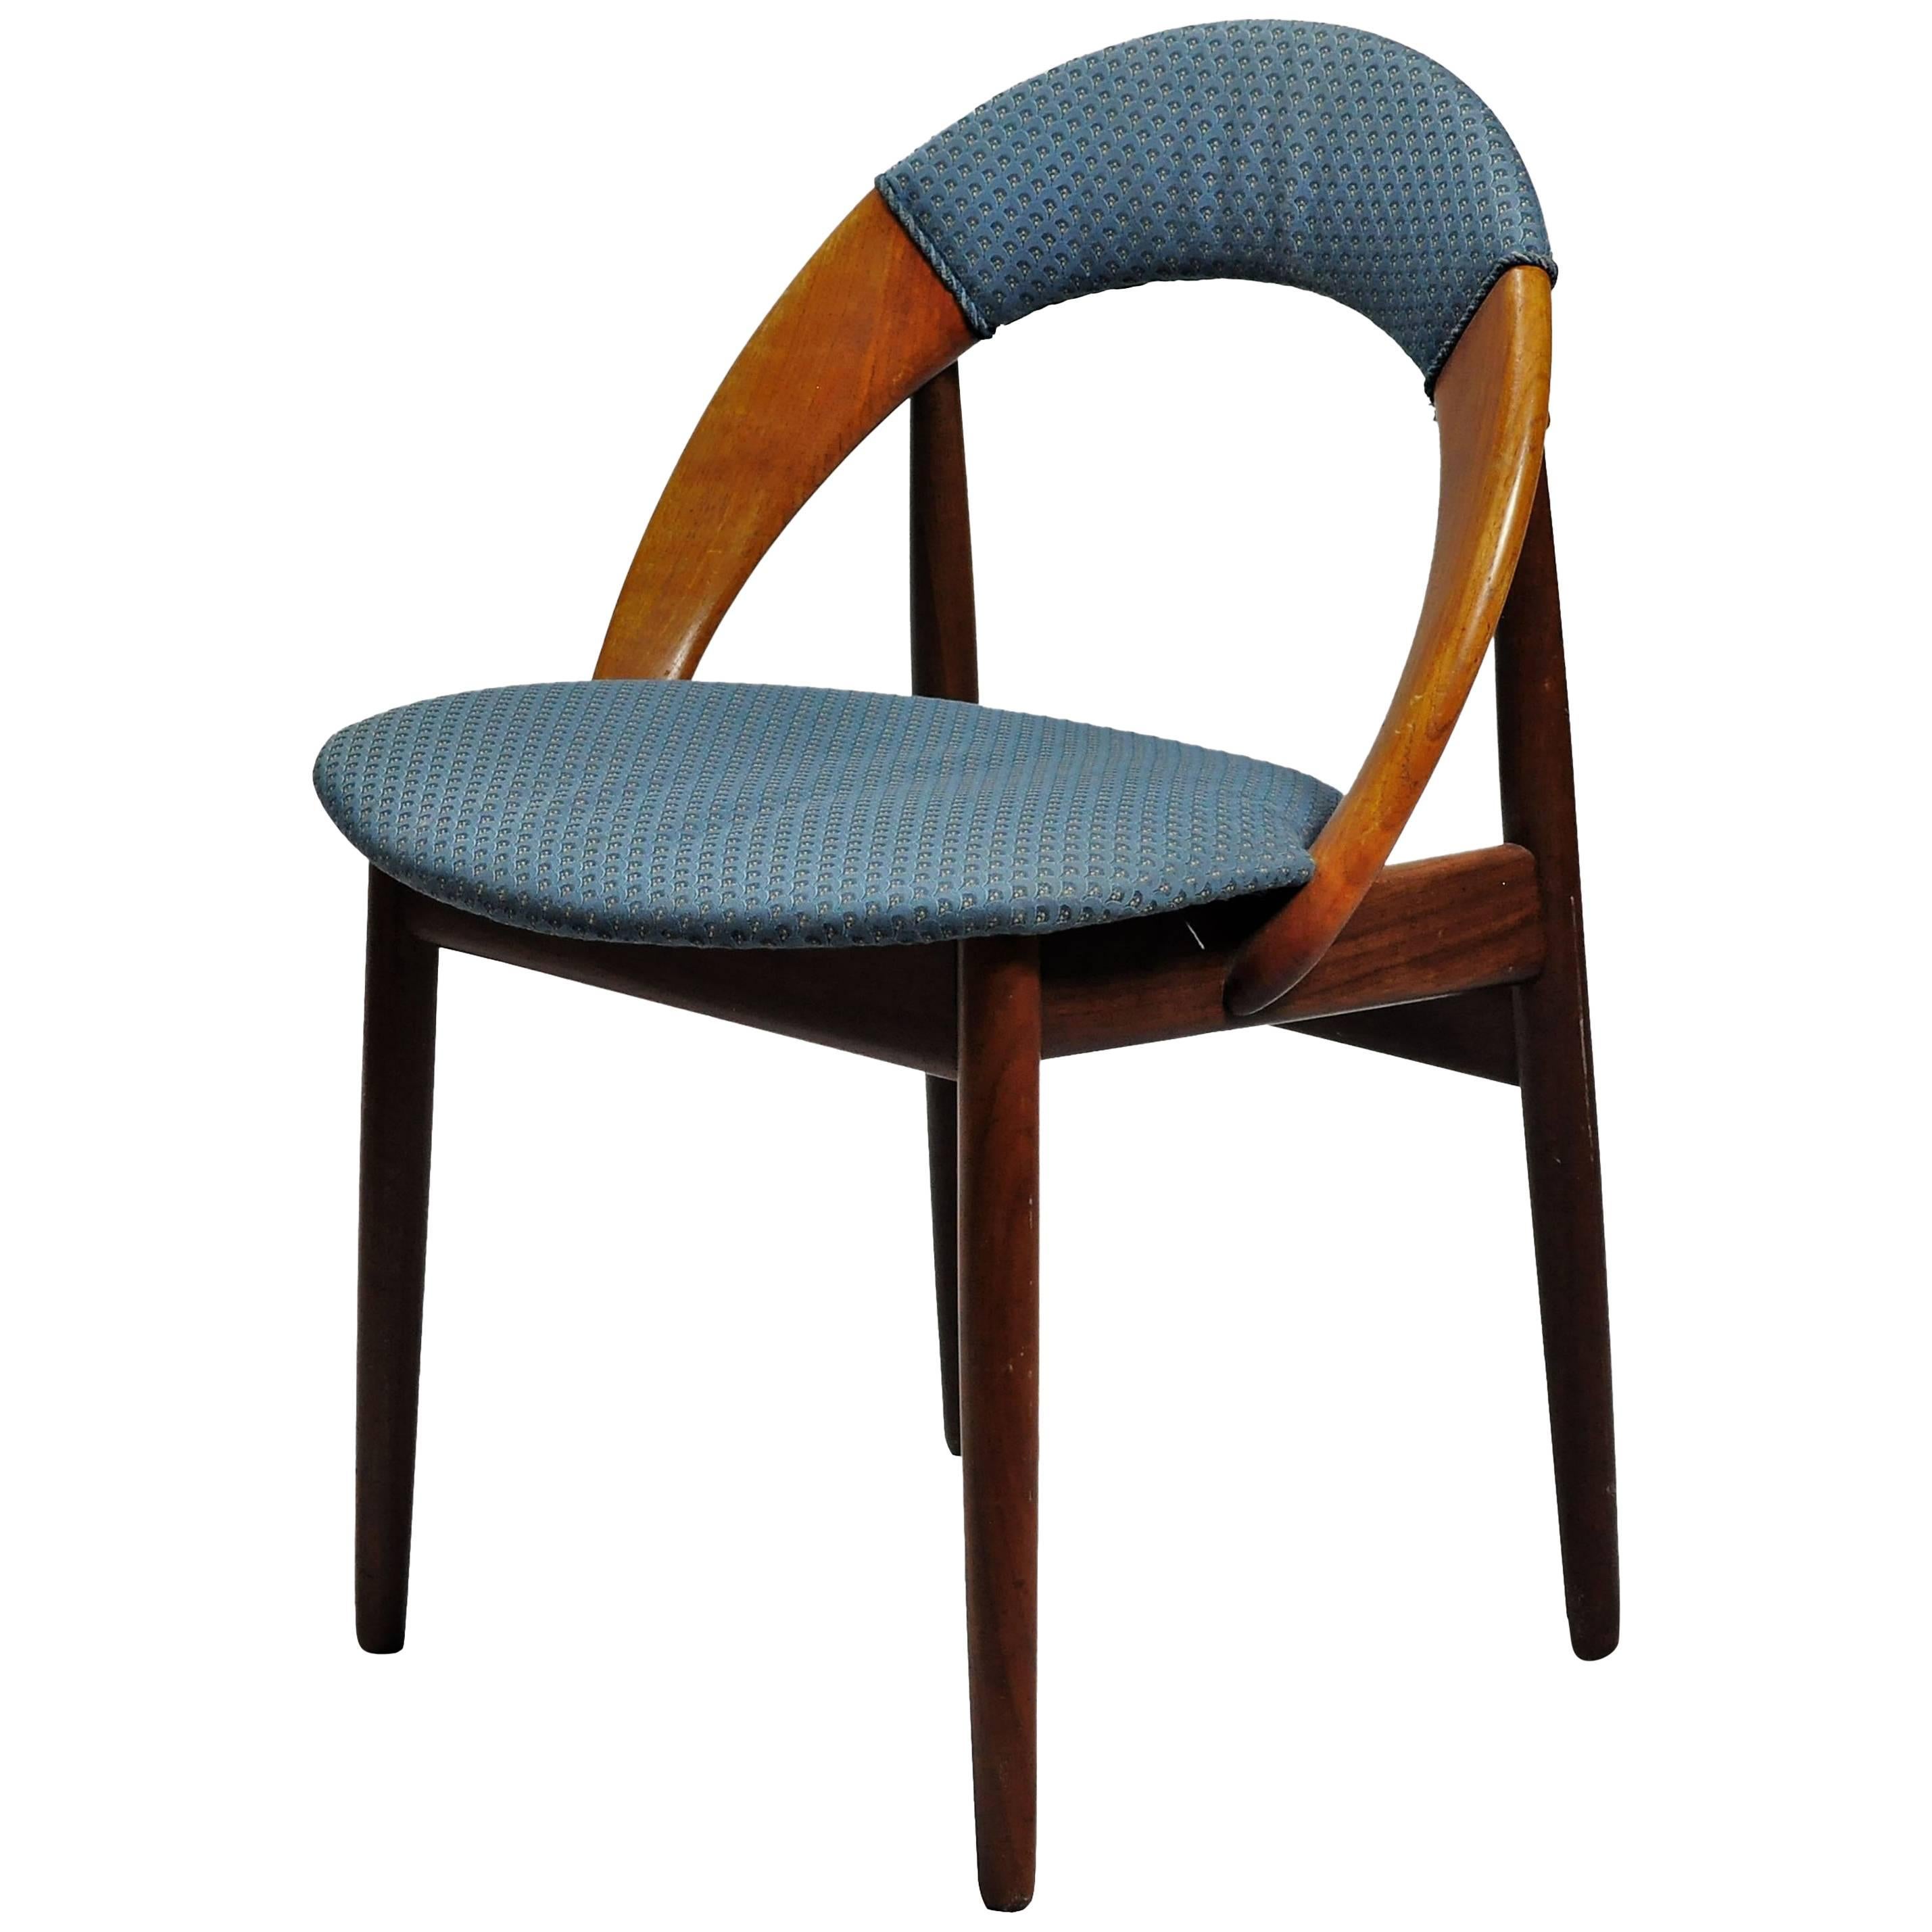 1960s Arne Hovmand-Olesen Side Chair in Teak and Fabric